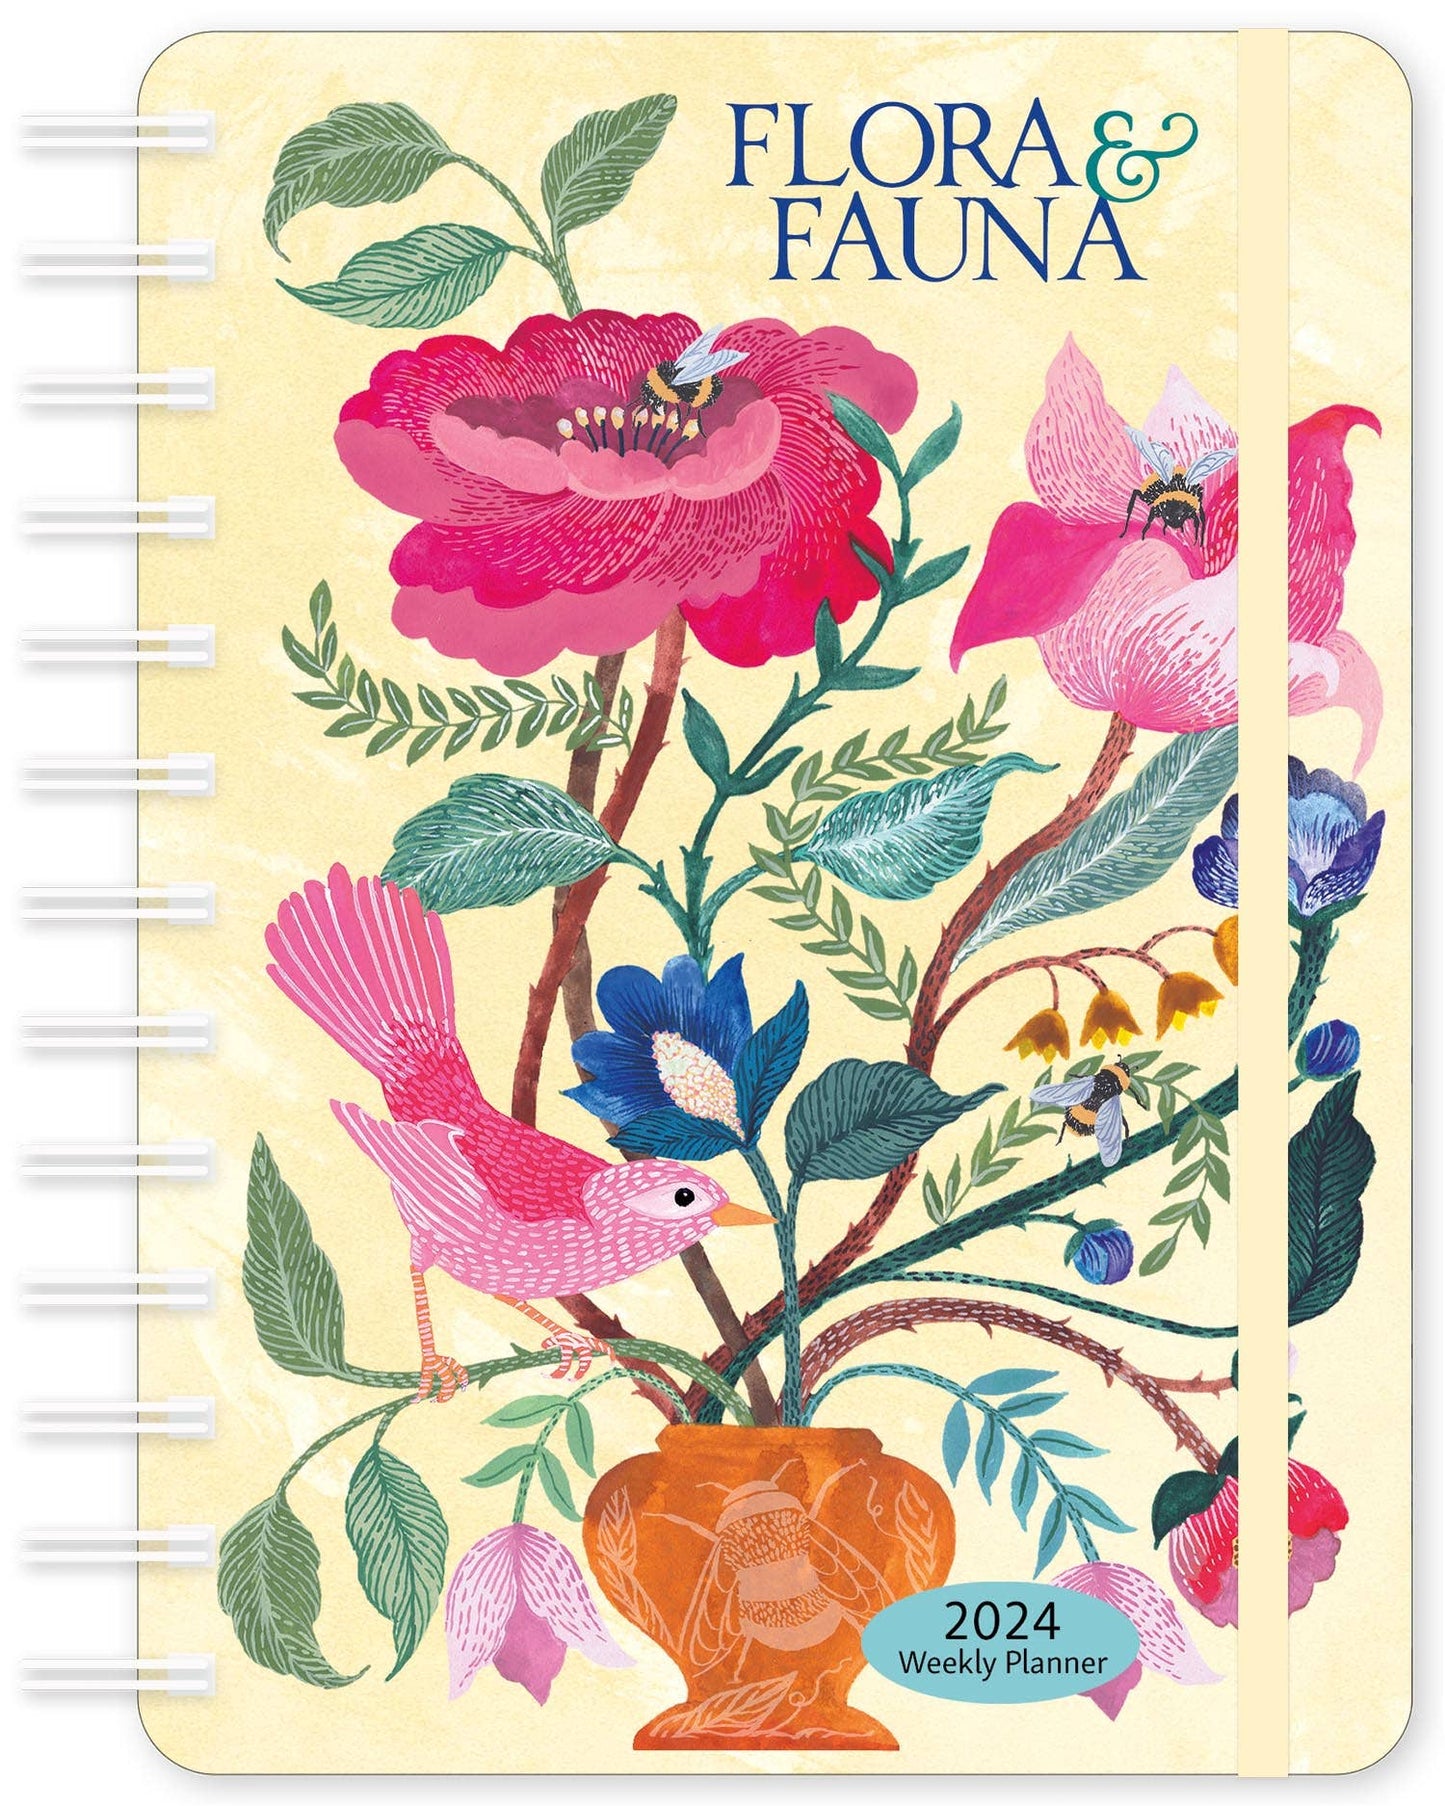 Flora & Fauna 2024 Weekly Planner by Malin Gyllensvaan